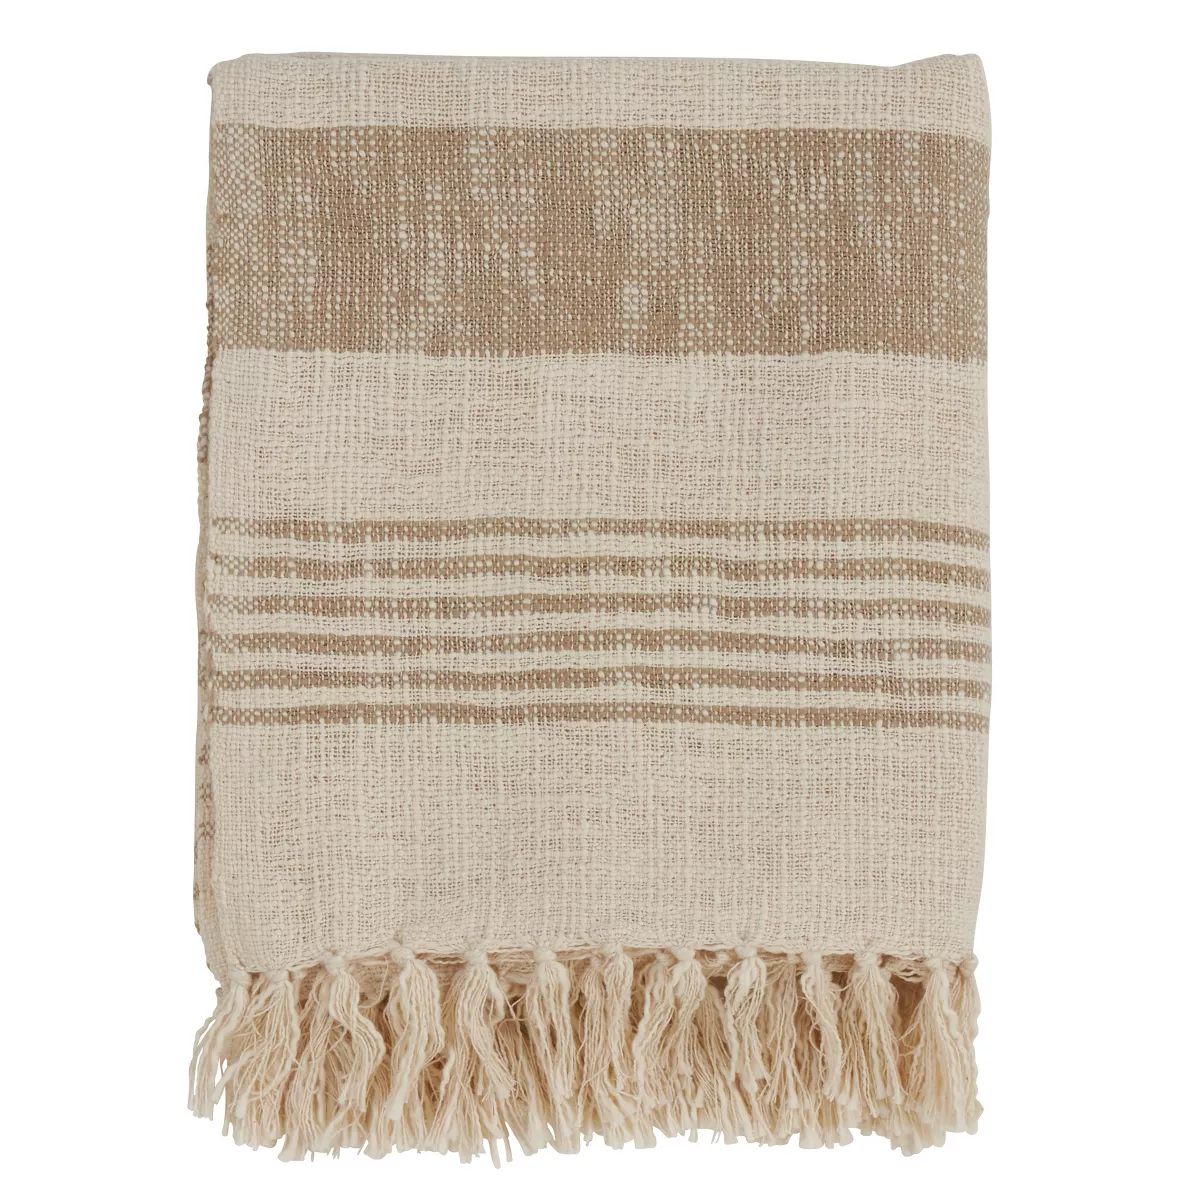 50"x60" Striped Throw Blanket with Tassels Tan - Saro Lifestyle | Target